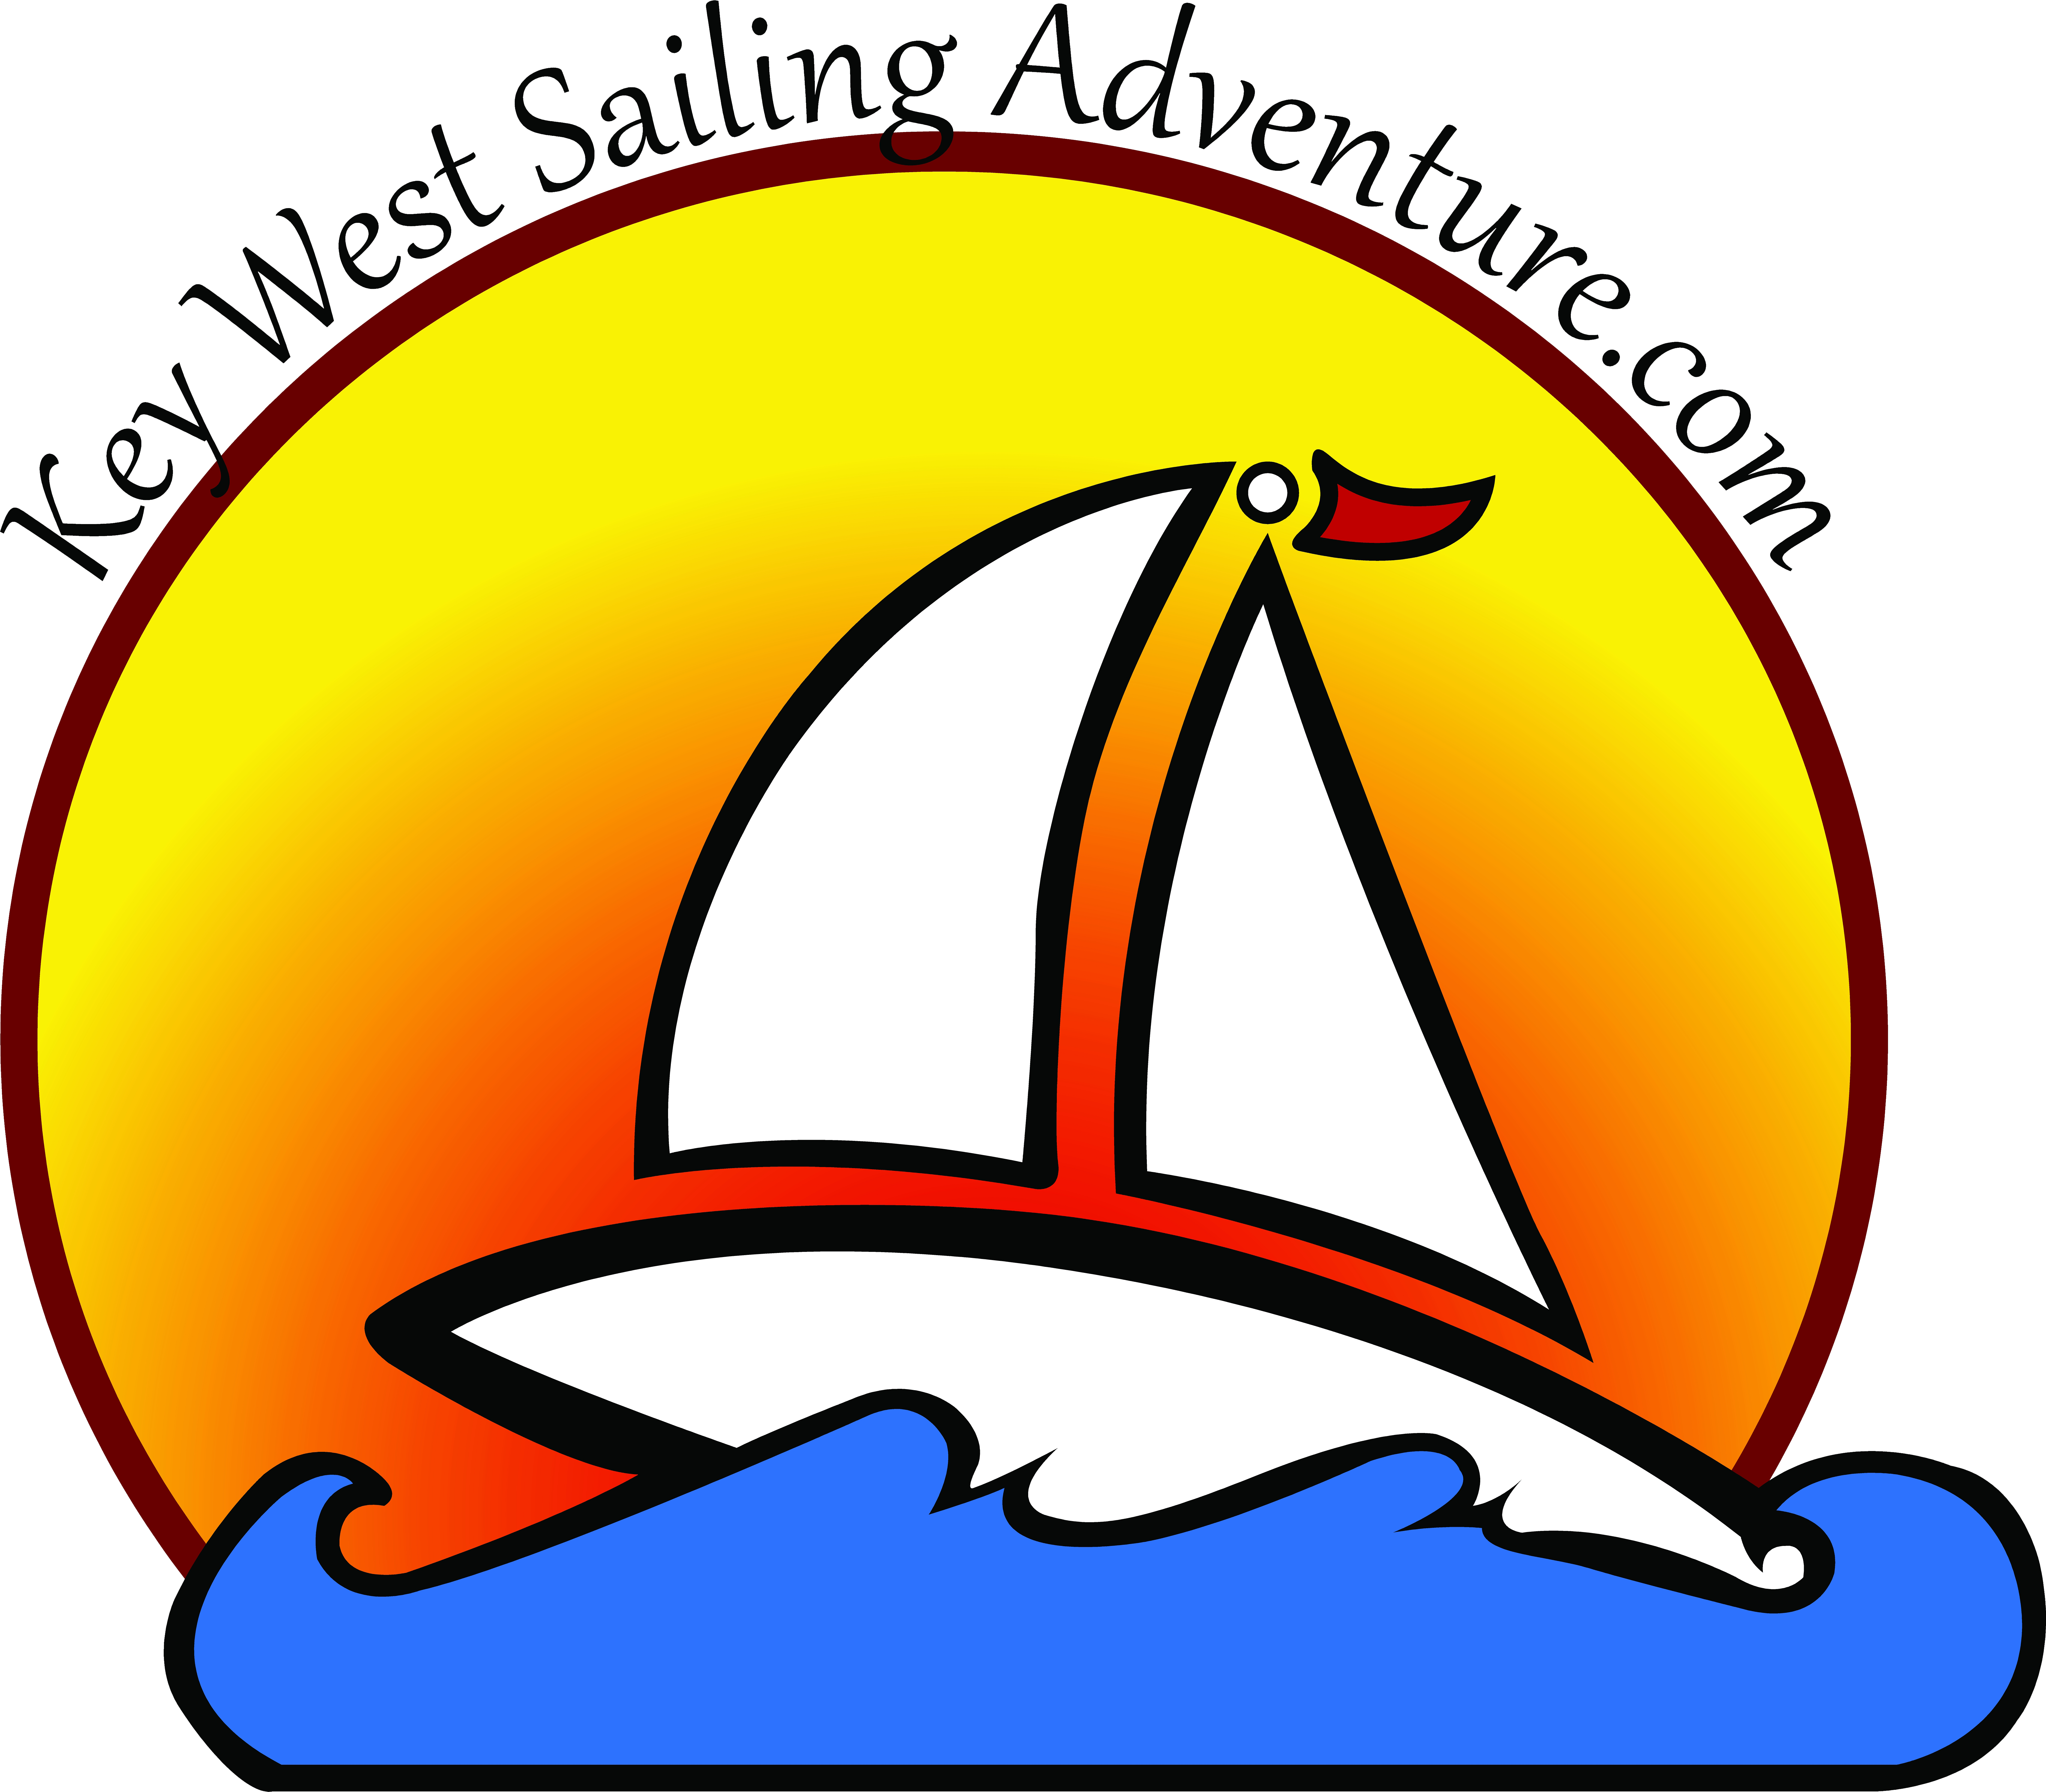 Key West Sailing Adventures Logo